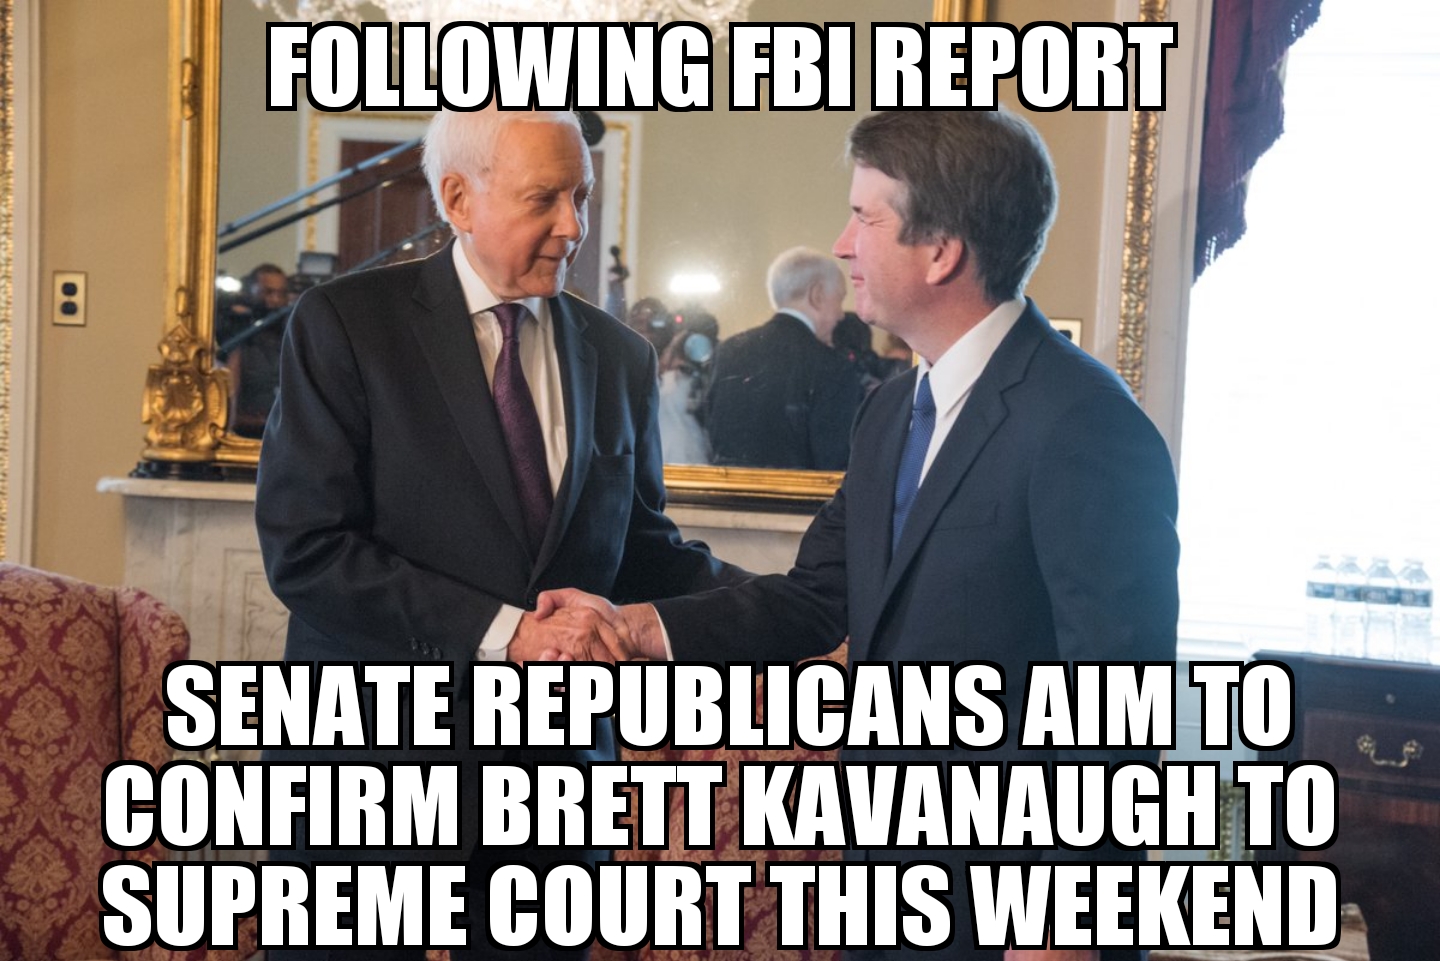 Republicans aim to confirm Kavanaugh this weekend